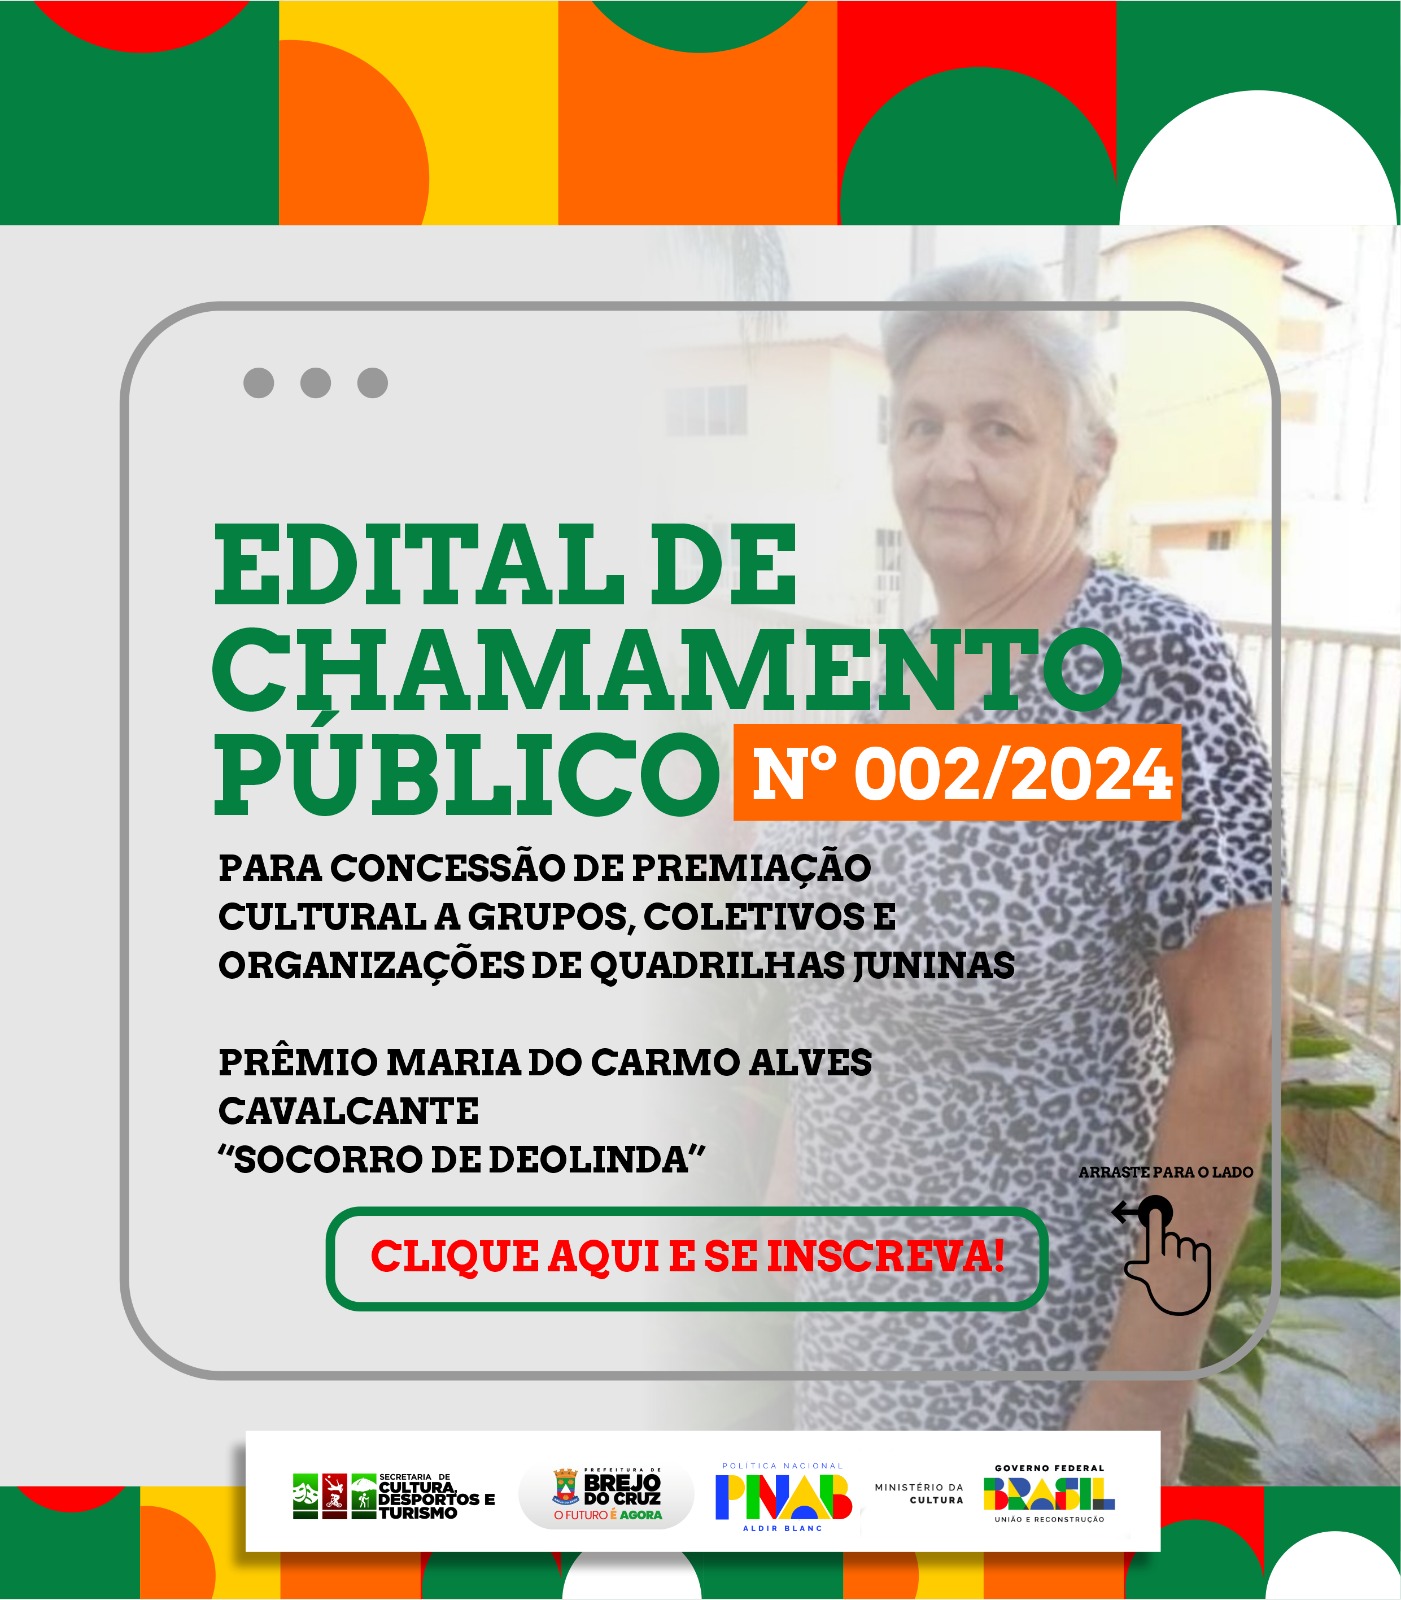 Foto Perfil EDITAL DE CHAMAMENTO PÚBLICO Nº 002/2024 - PRÊMIO SOCORRO DE DEOLINDA